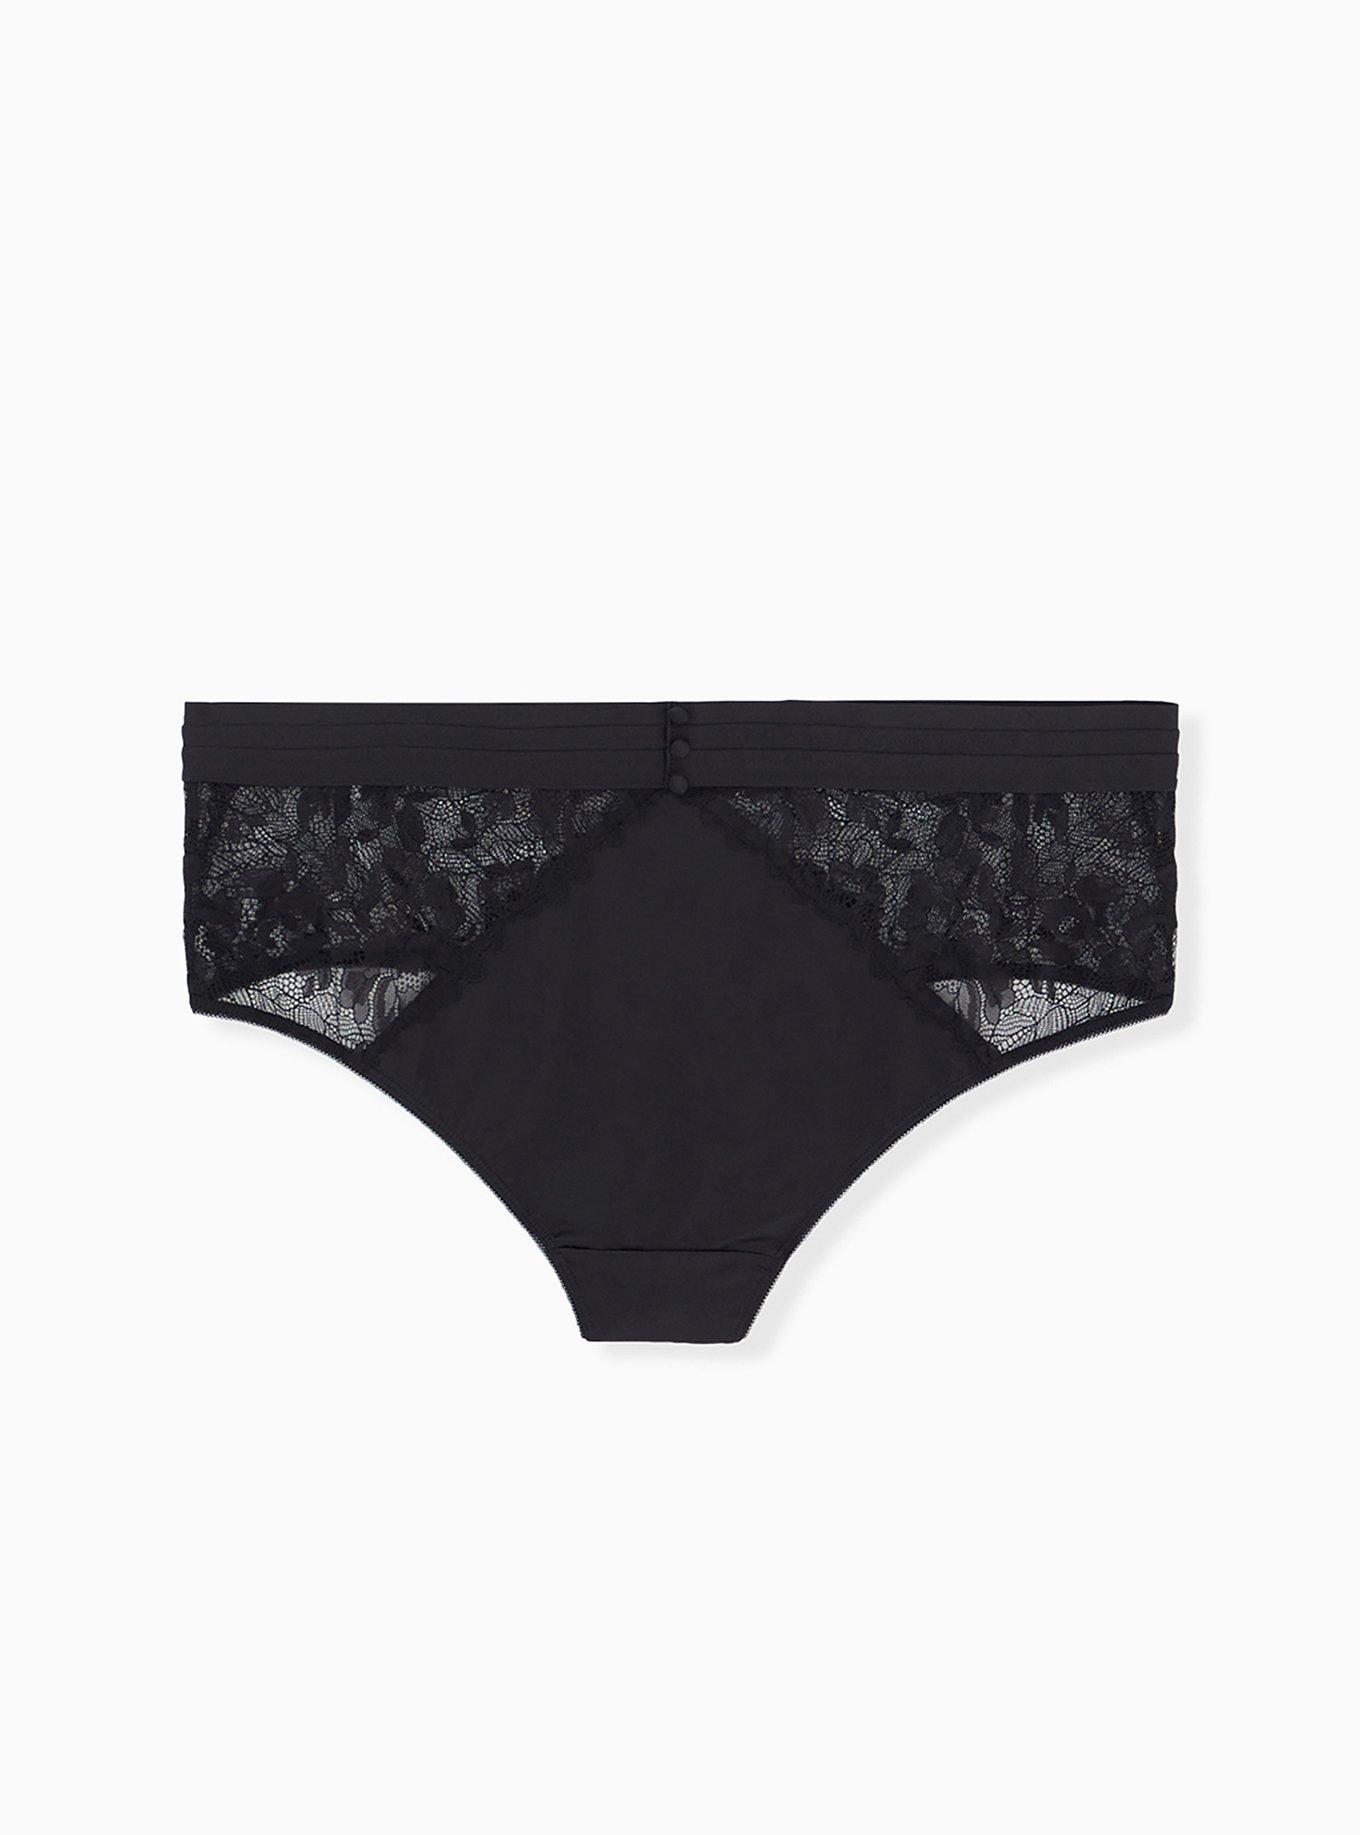 S-XL 2018 Women New Arrival Sexy Underwear Female White Black